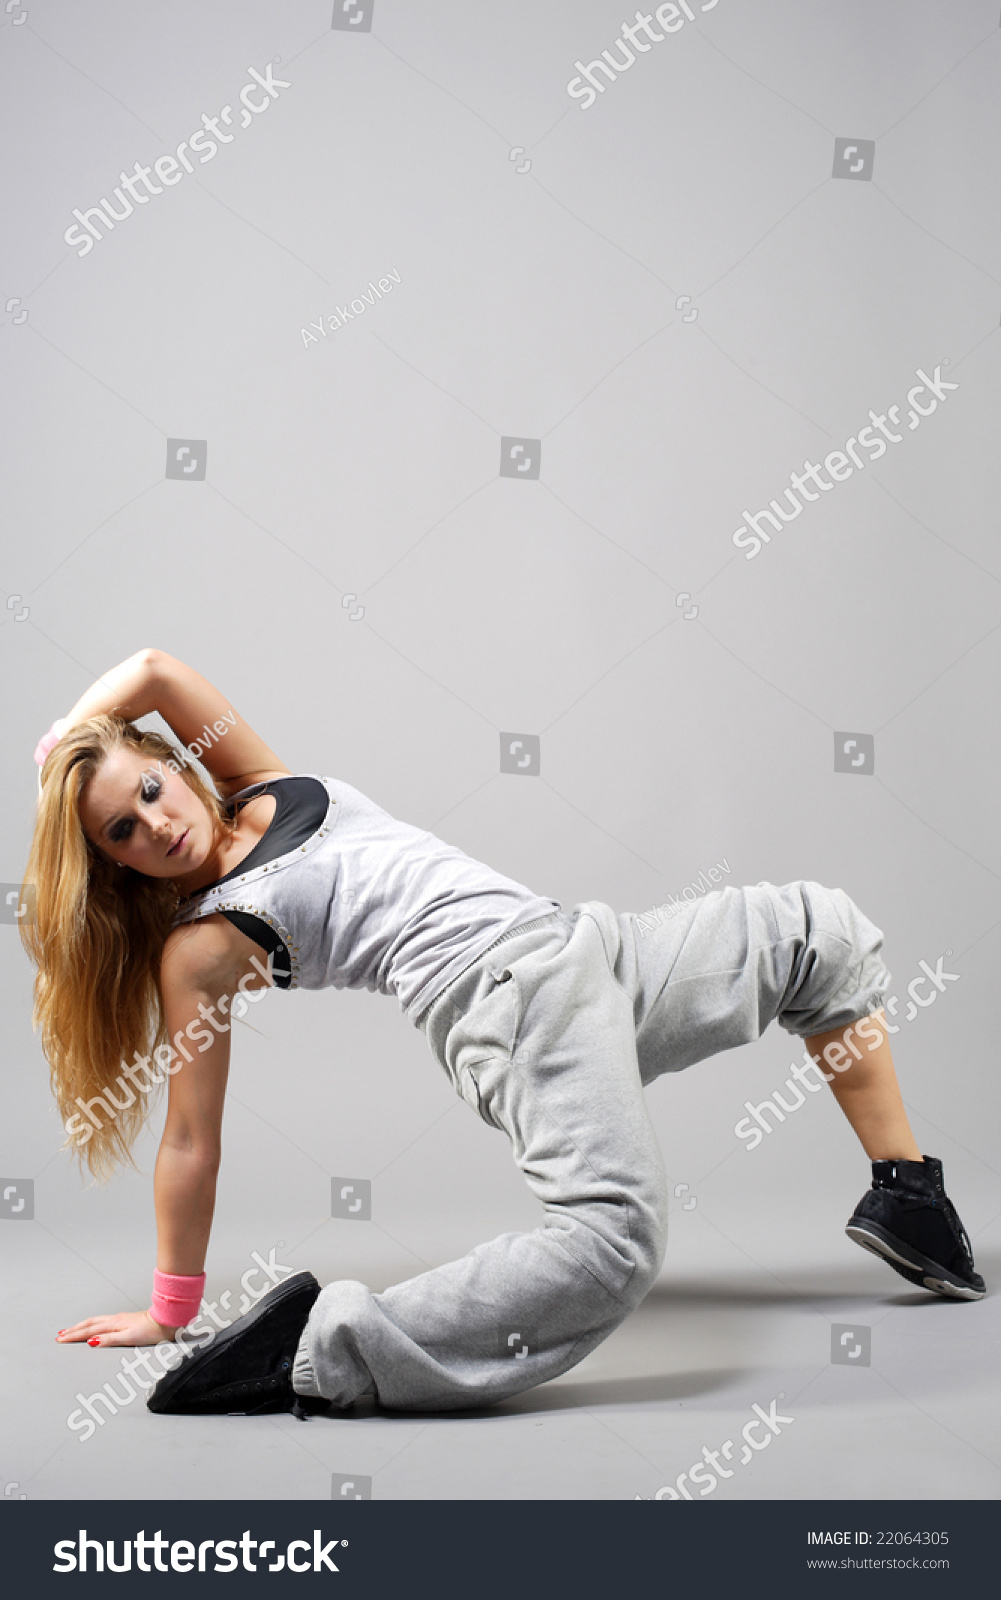 Hip Hop Style Dancer Posing On Stock Photo Edit Now 22064305